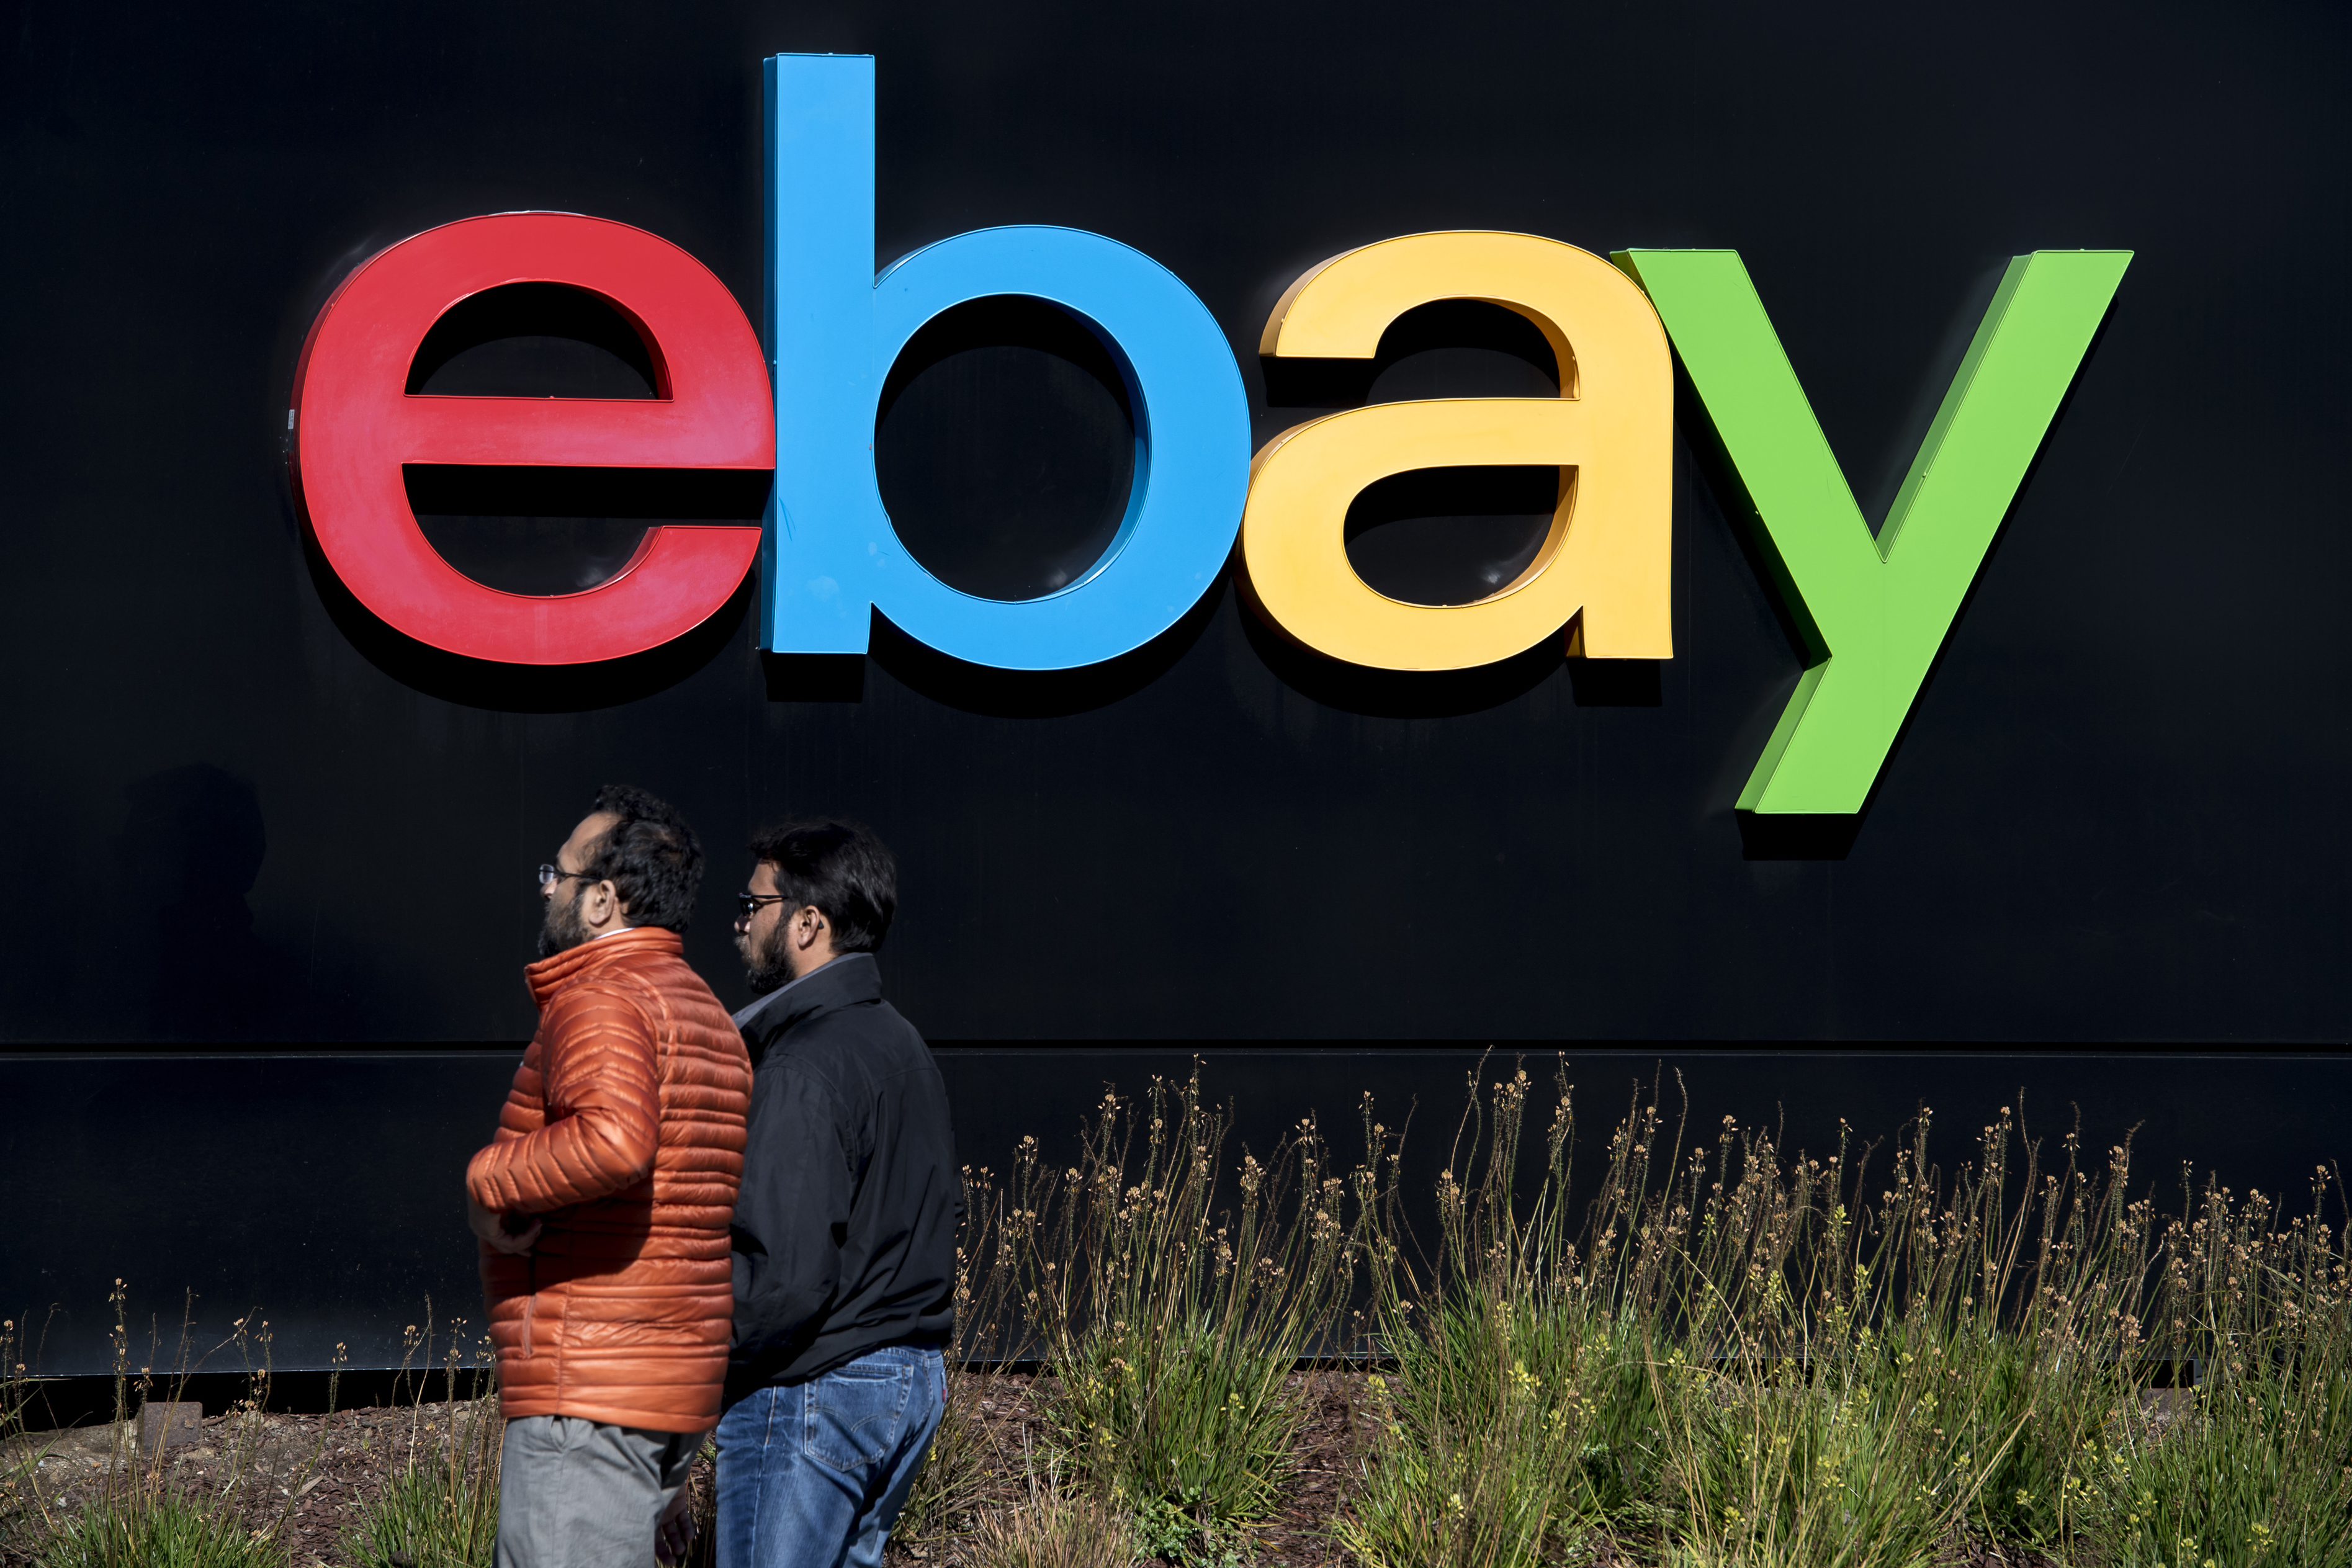 The eBay Inc. Campus Ahead Of Earnings Figures